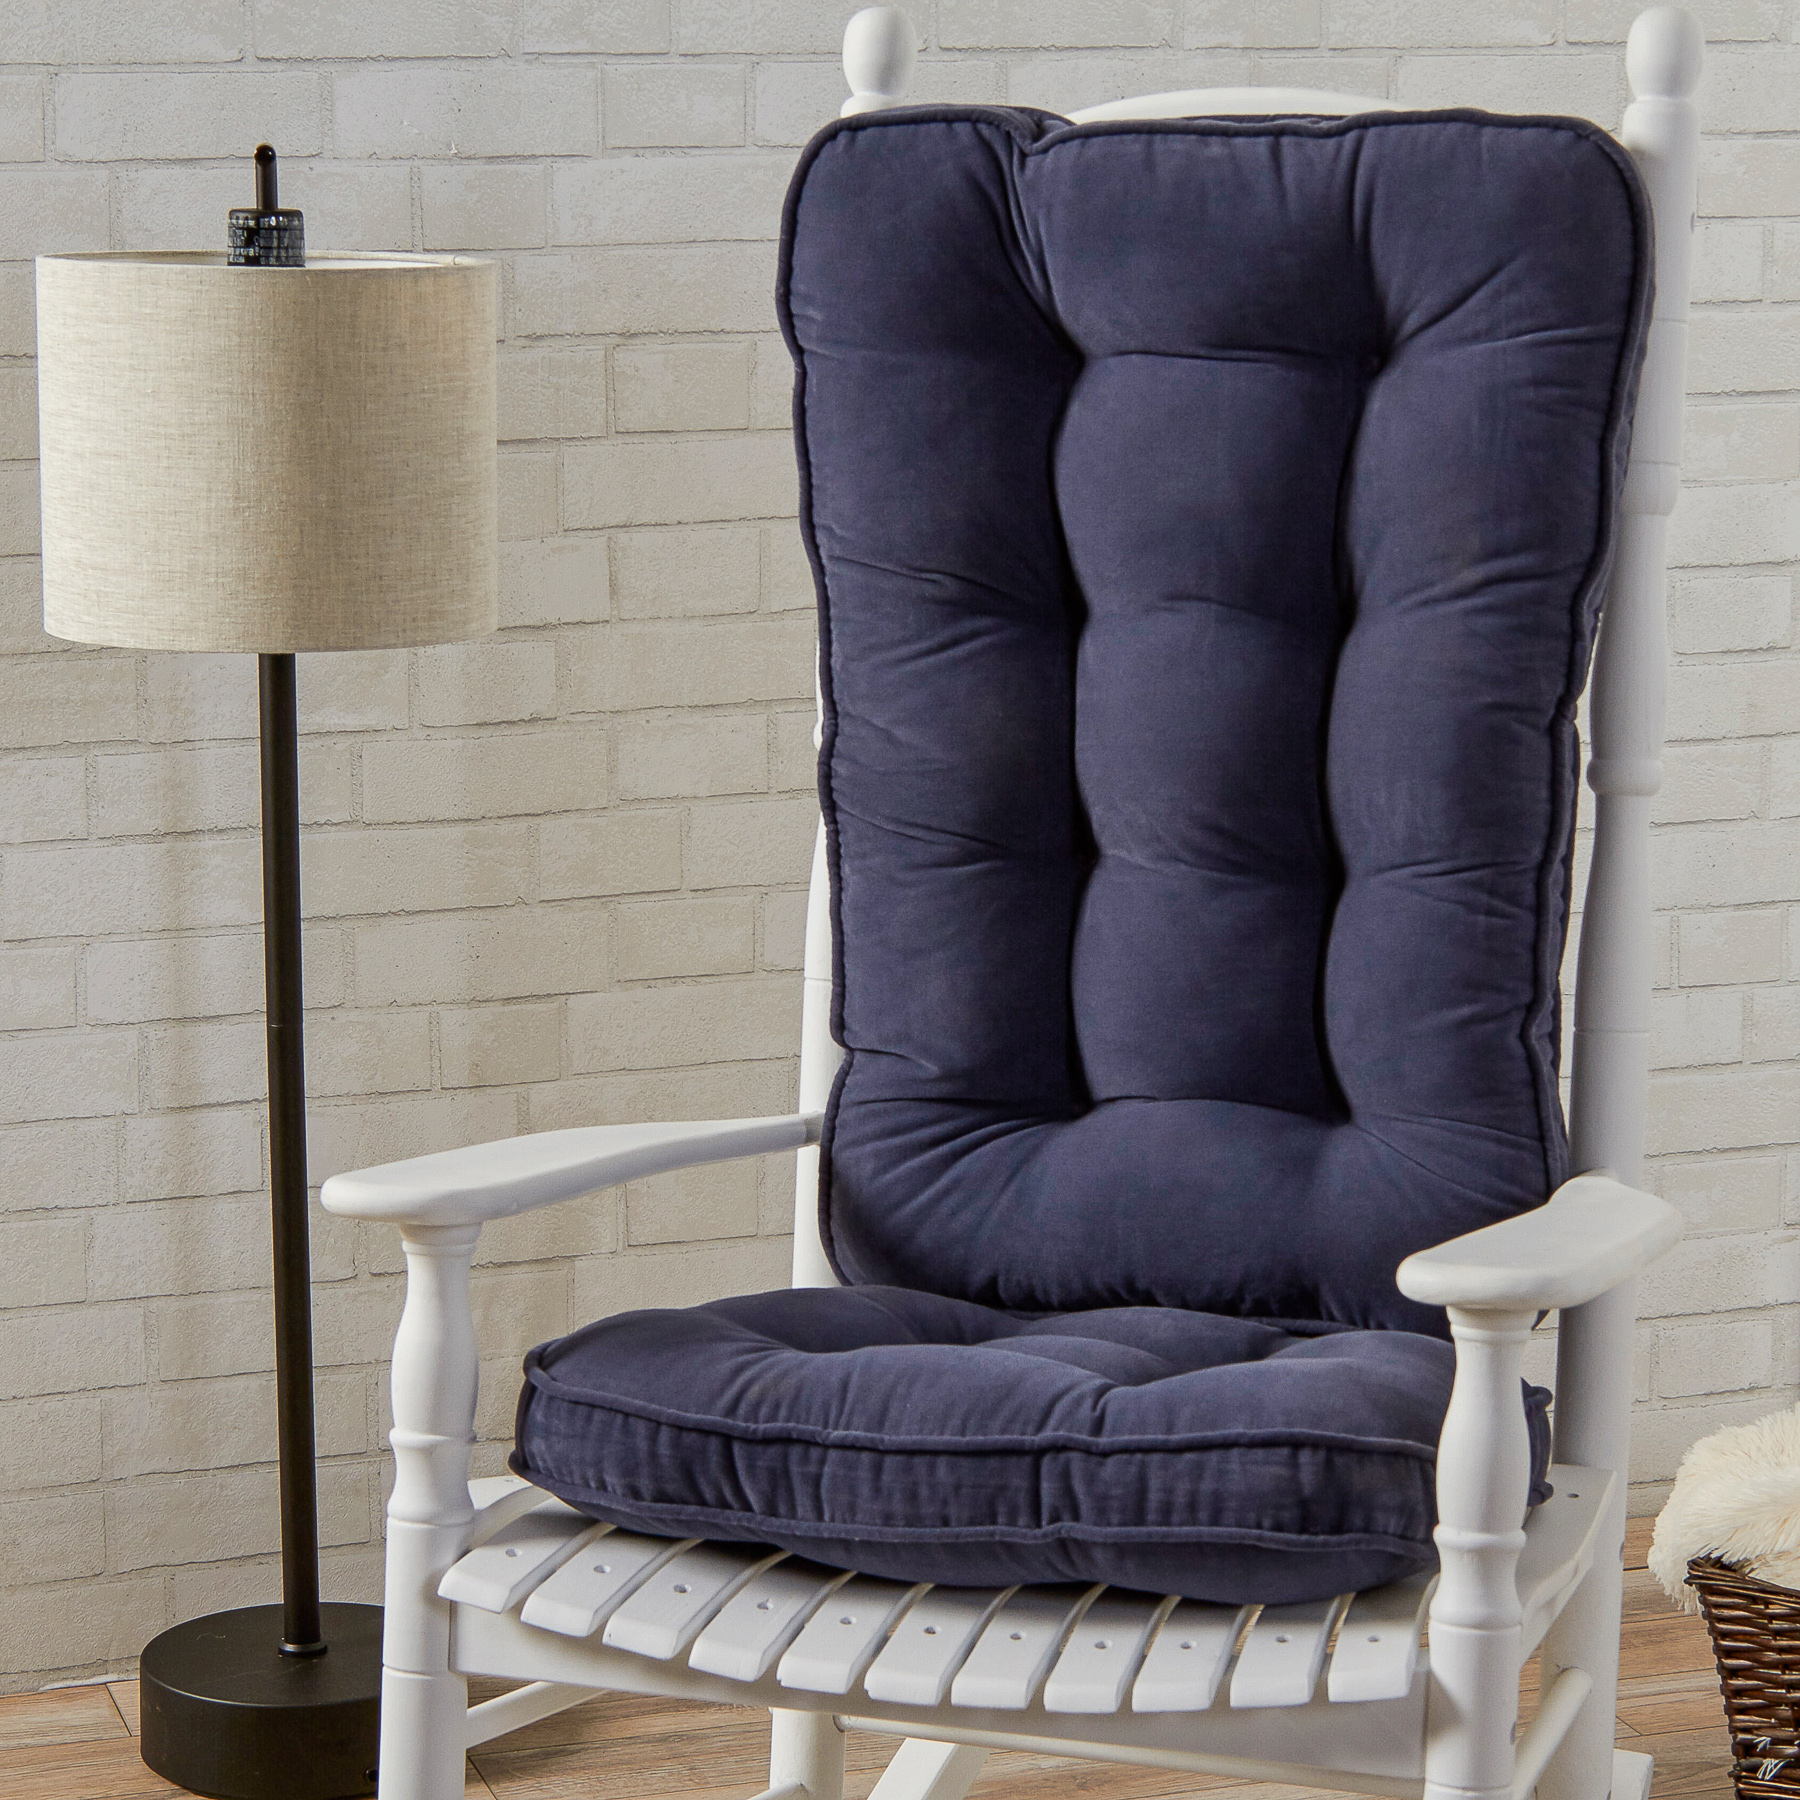 Greendale Home Fashions Hyatt Jumbo Rocking Chair Cushion